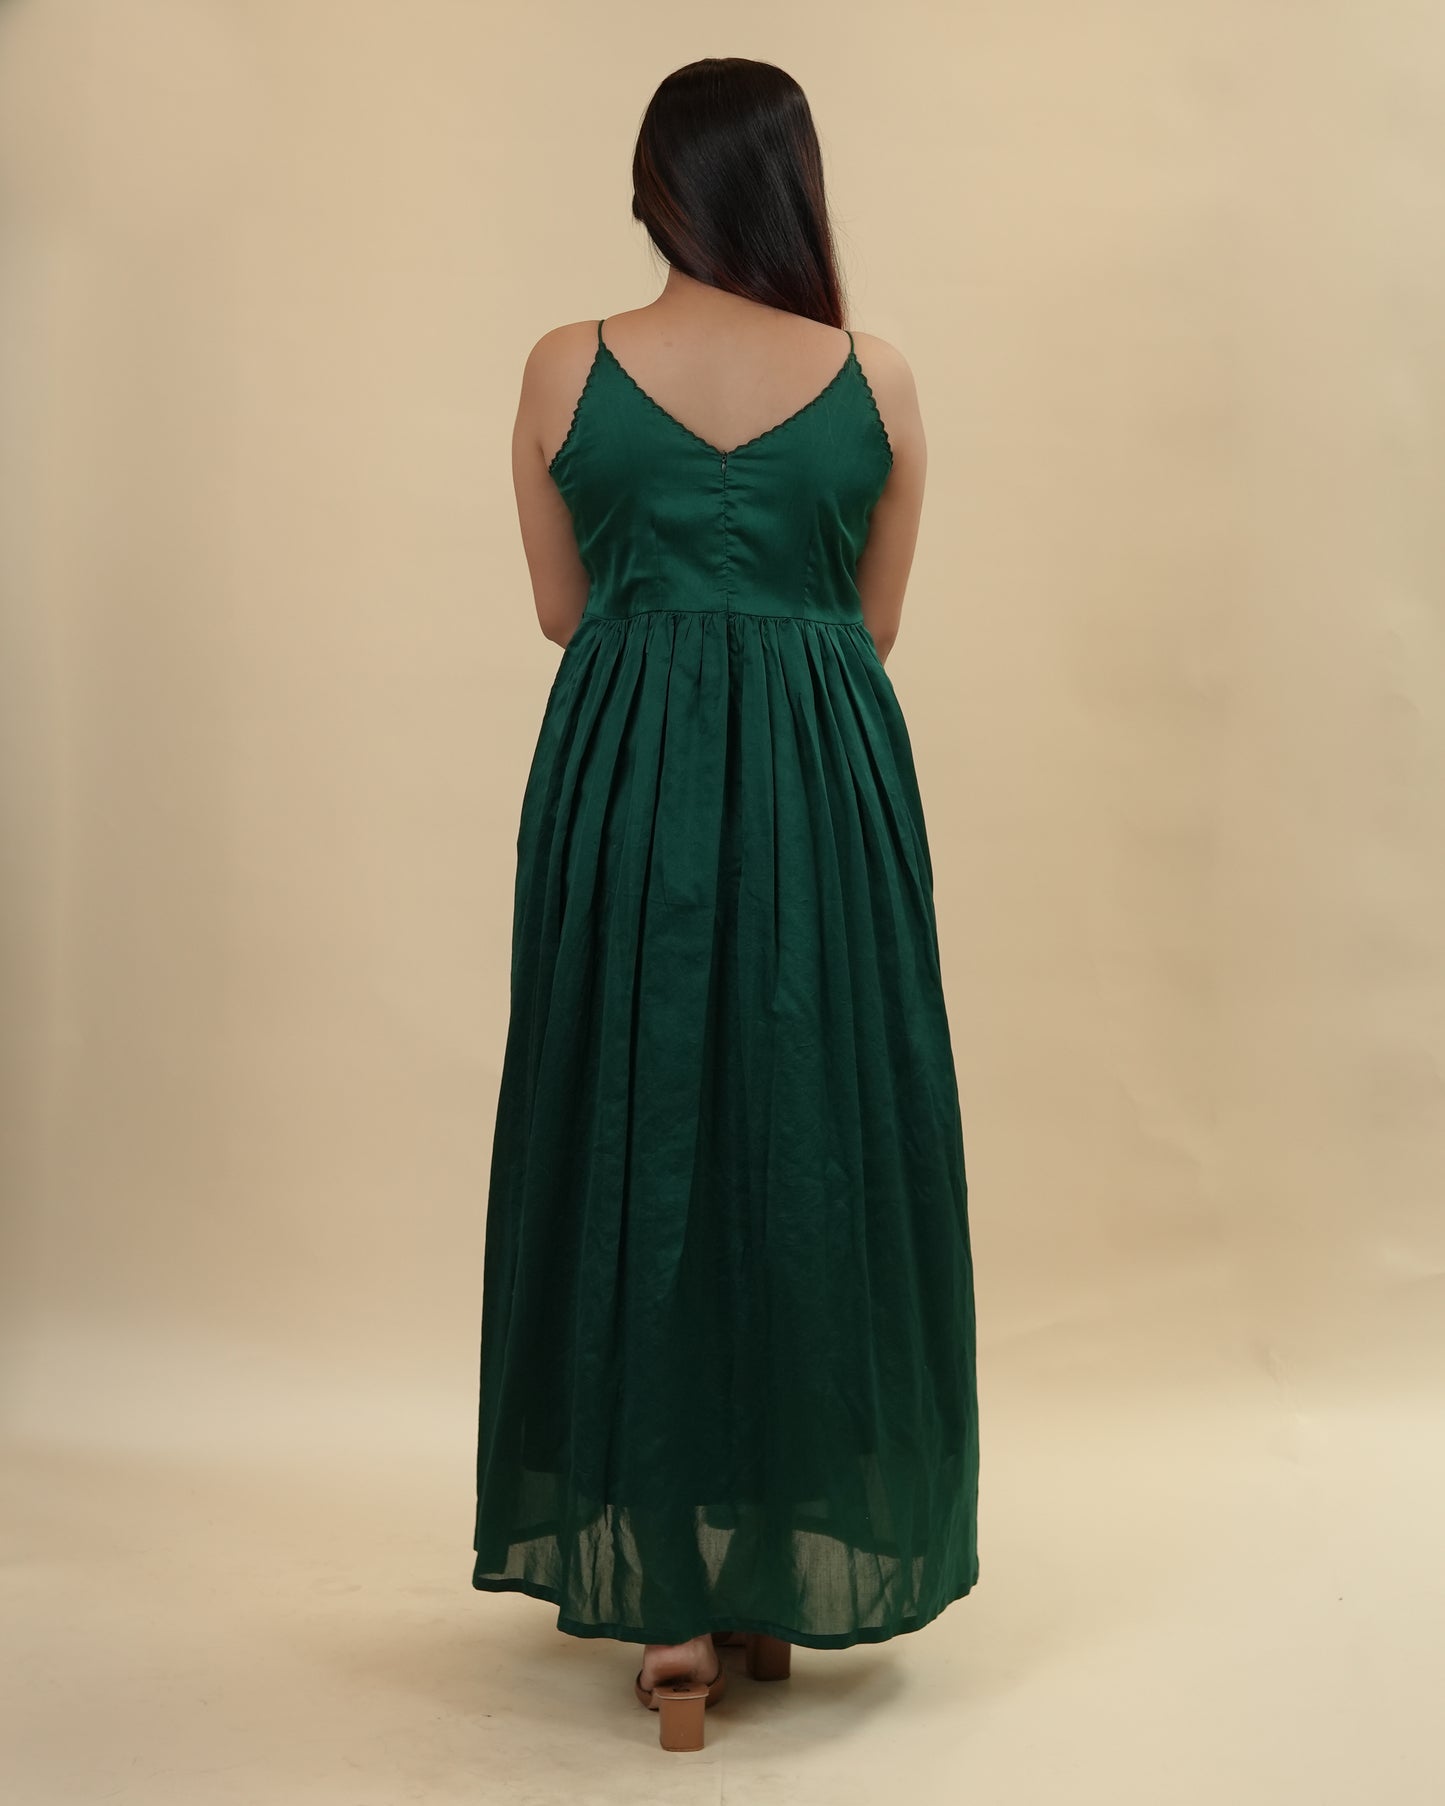 Dark green strap dress with emroidered yoke